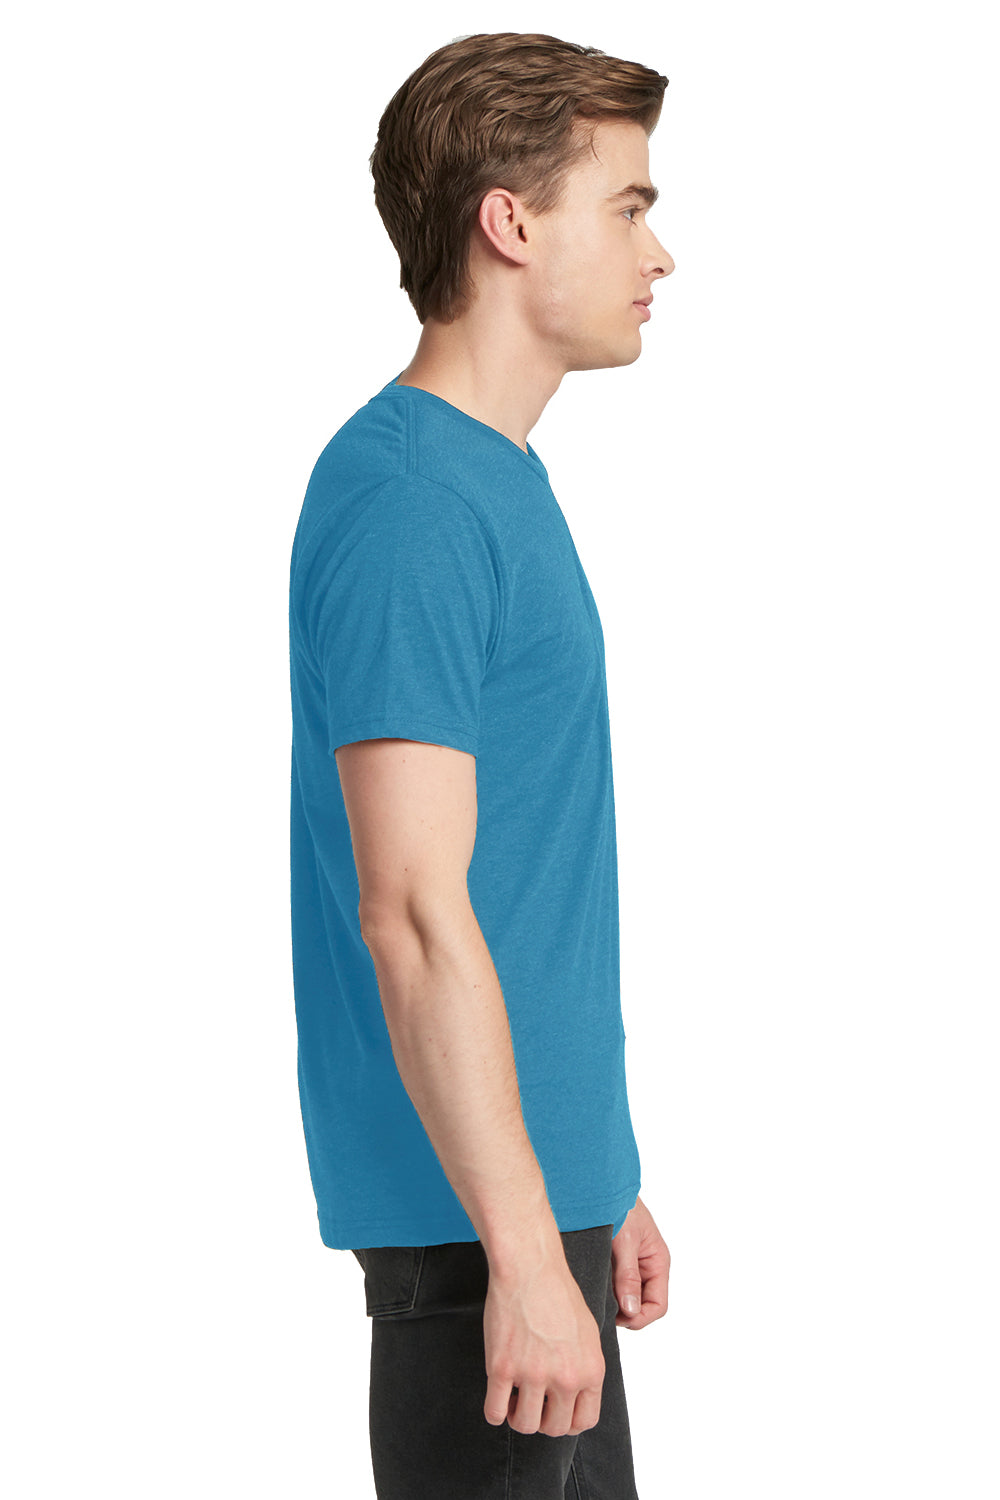 Next Level 6010 Mens Jersey Short Sleeve Crewneck T-Shirt Turquoise Blue Side